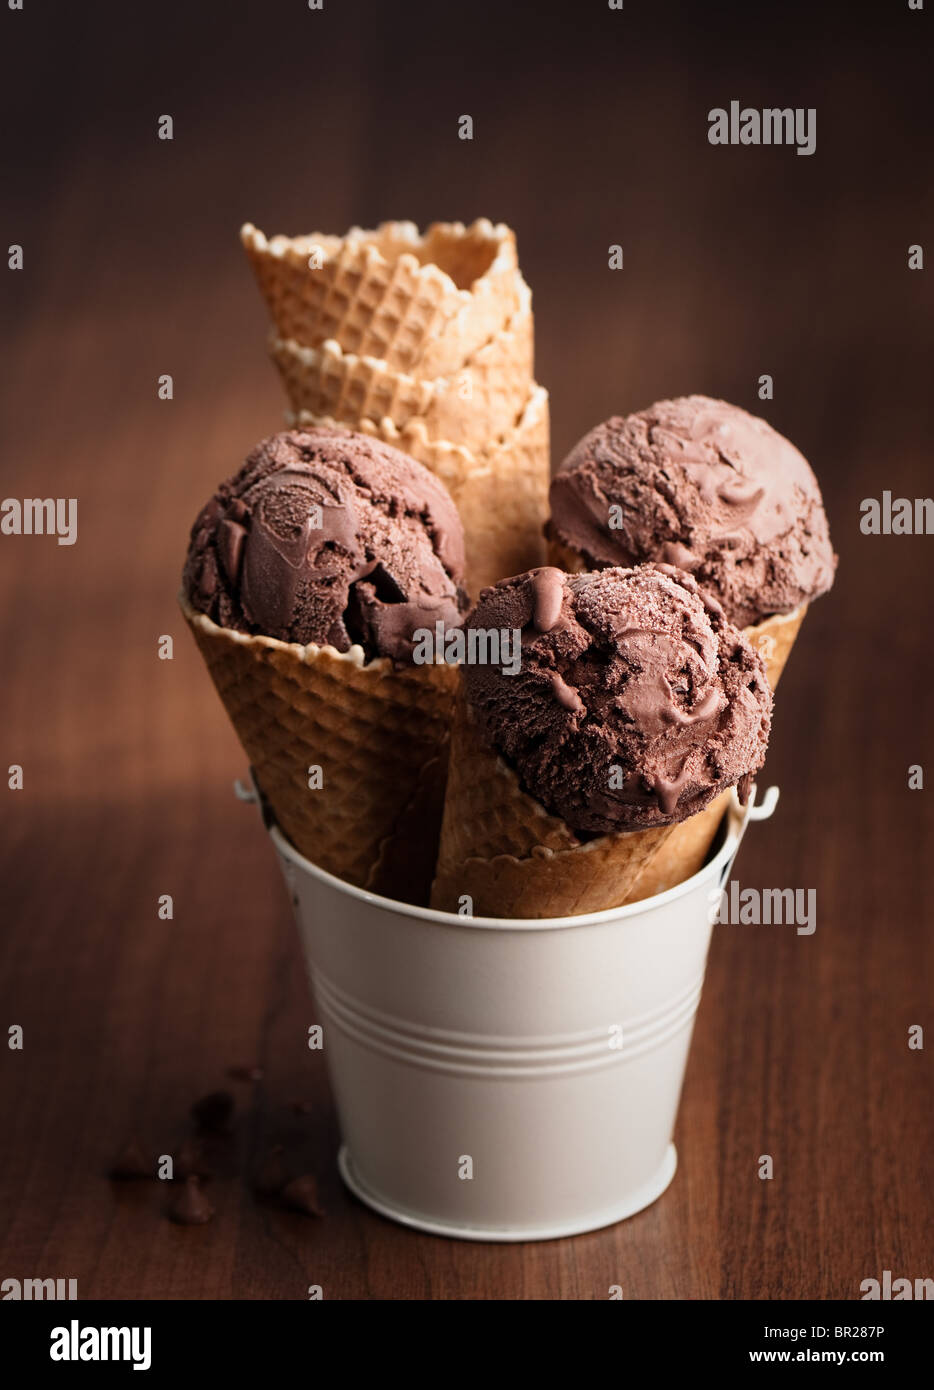 Chocolate ice cream in wafer cones standing in cream coloured metal bucket Stock Photo